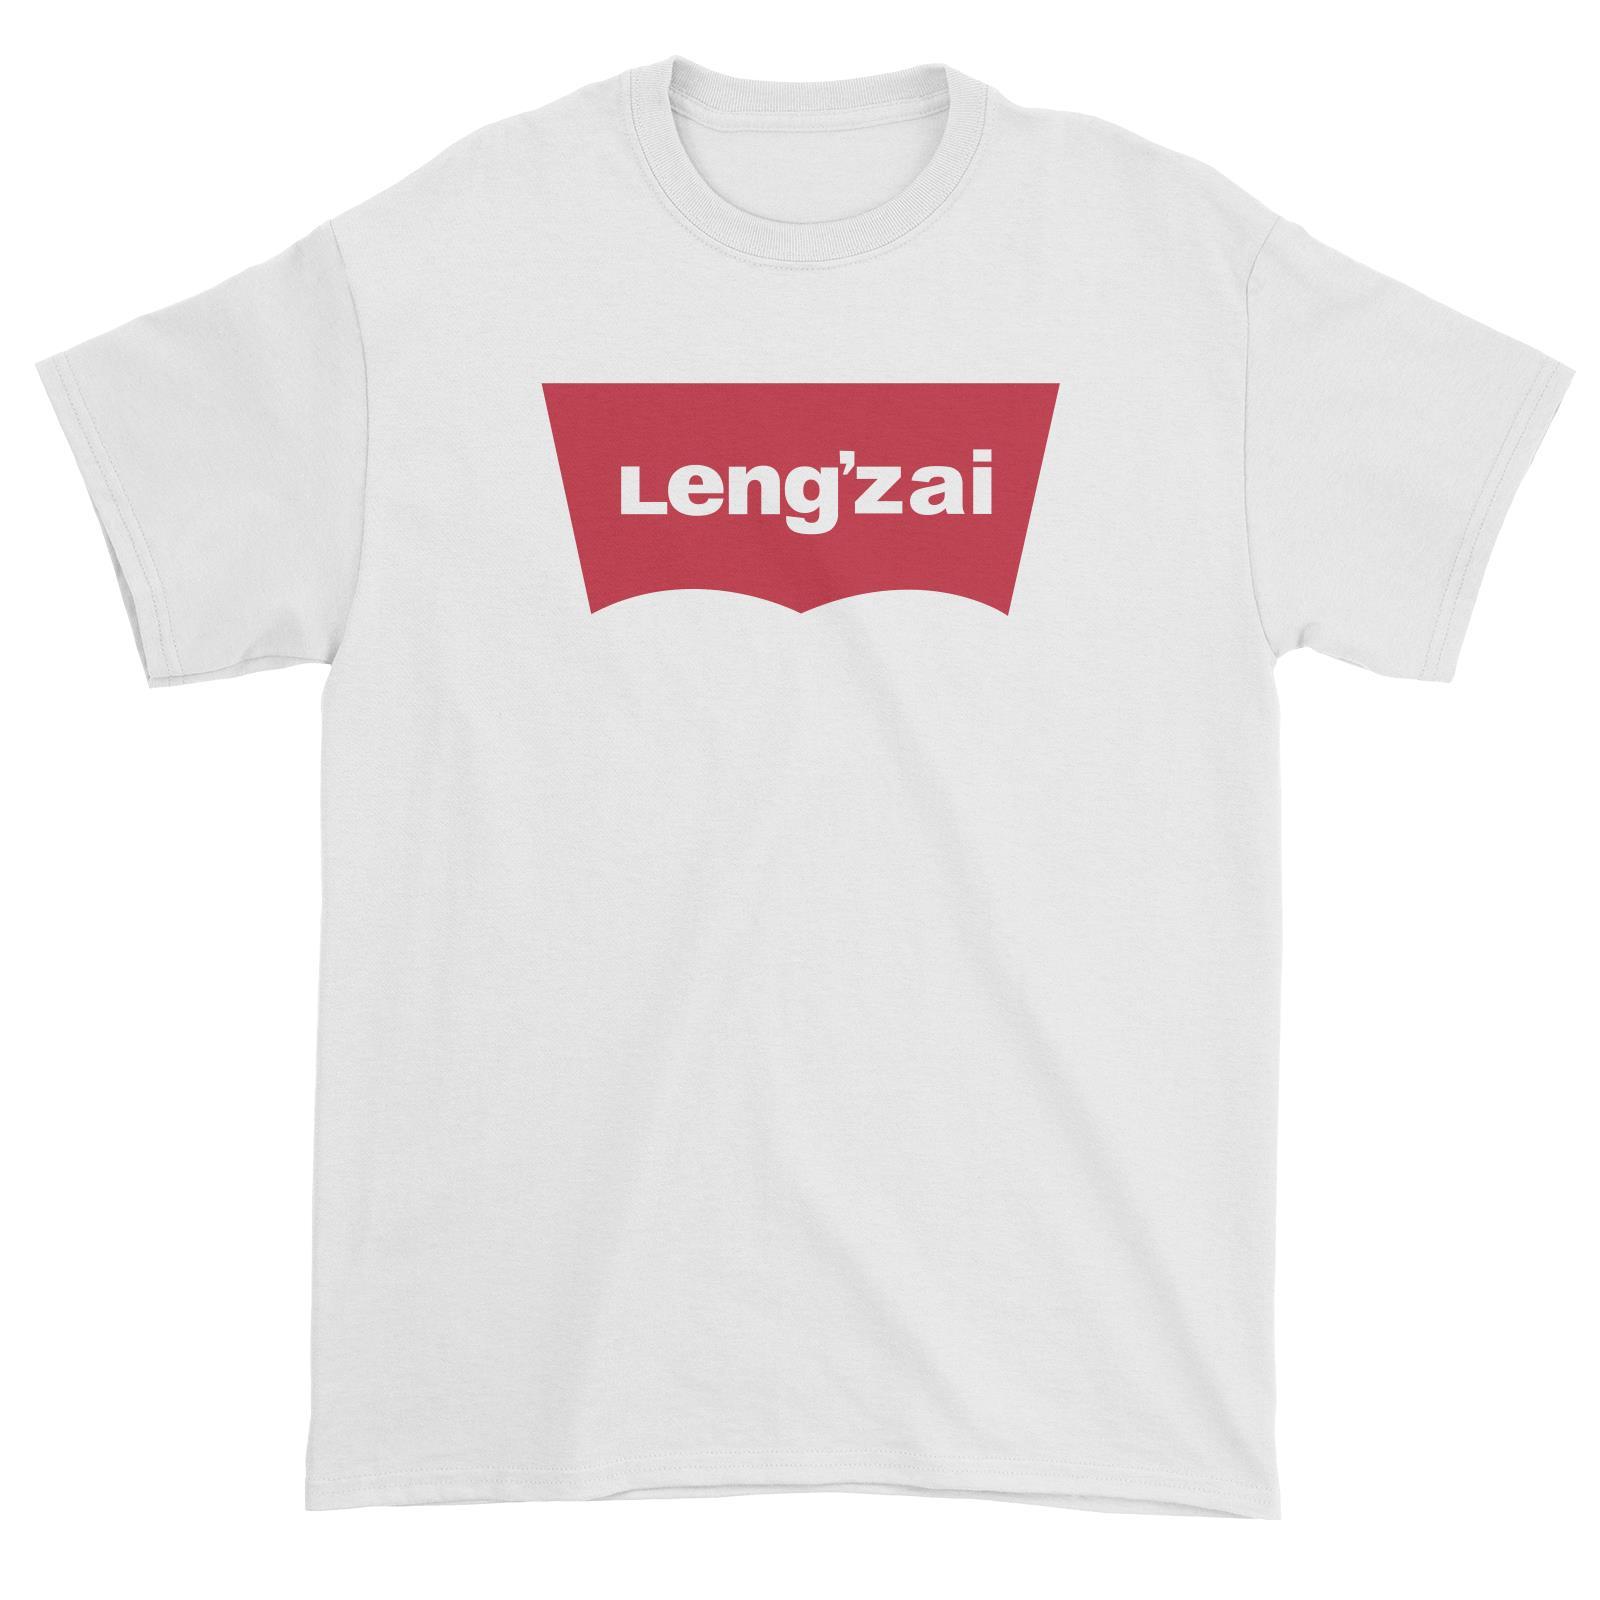 Slang Statement Lengzai Unisex T-Shirt